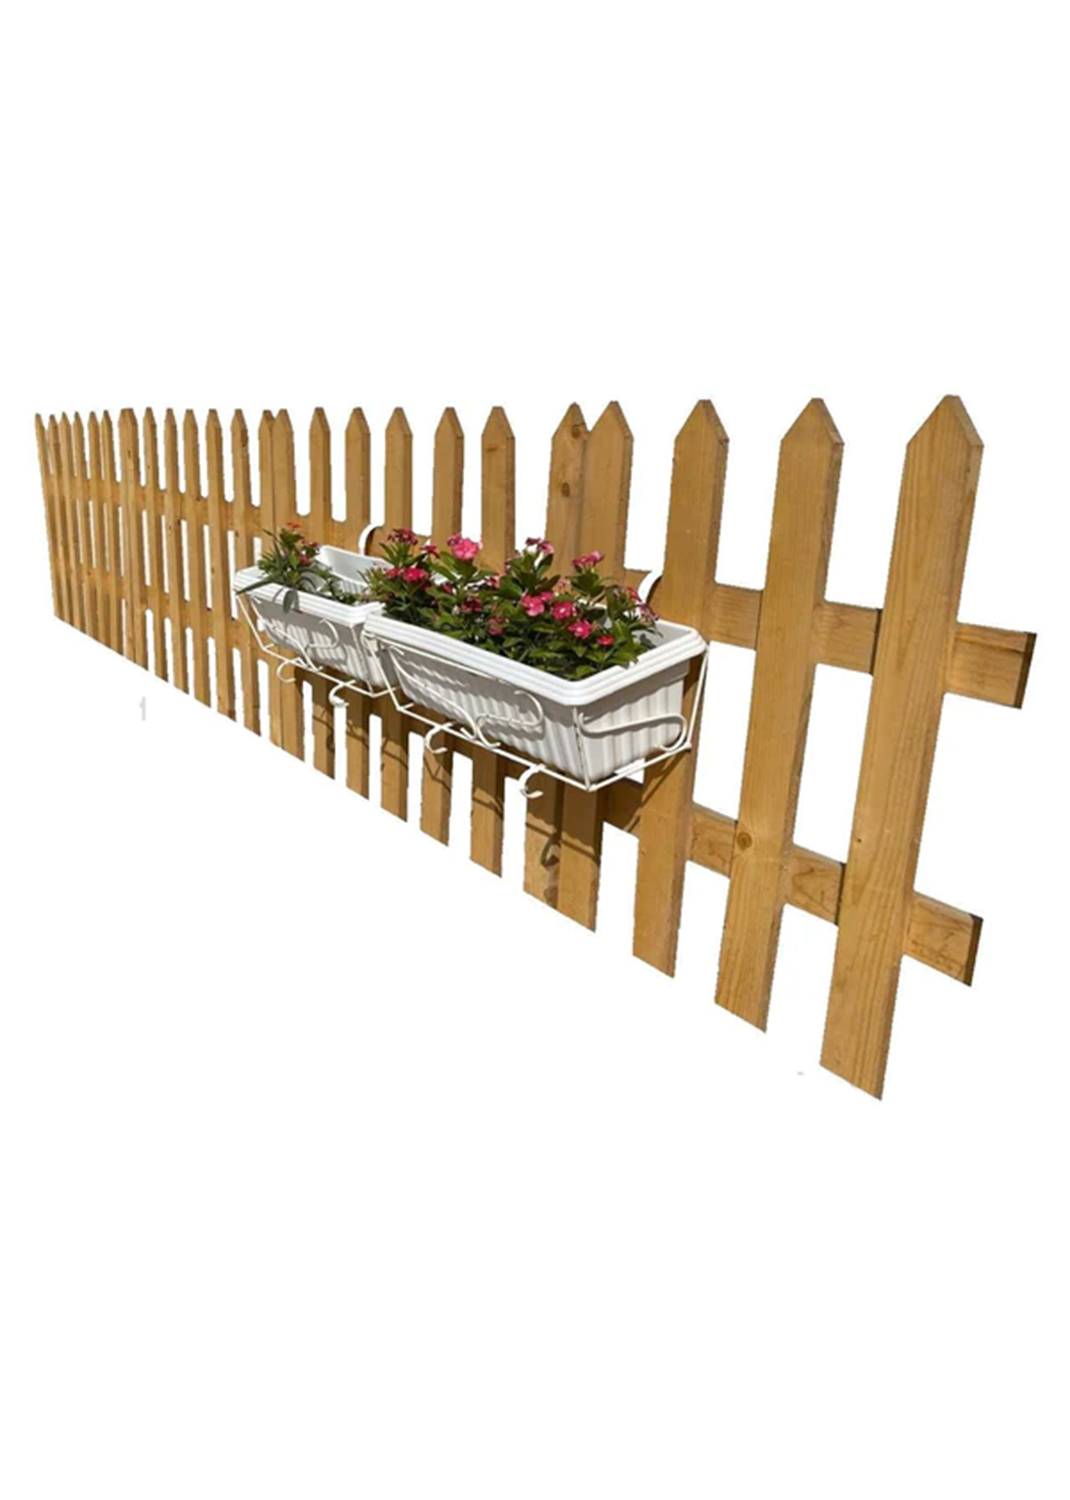 Handmade Cut Shape Wooden Fence